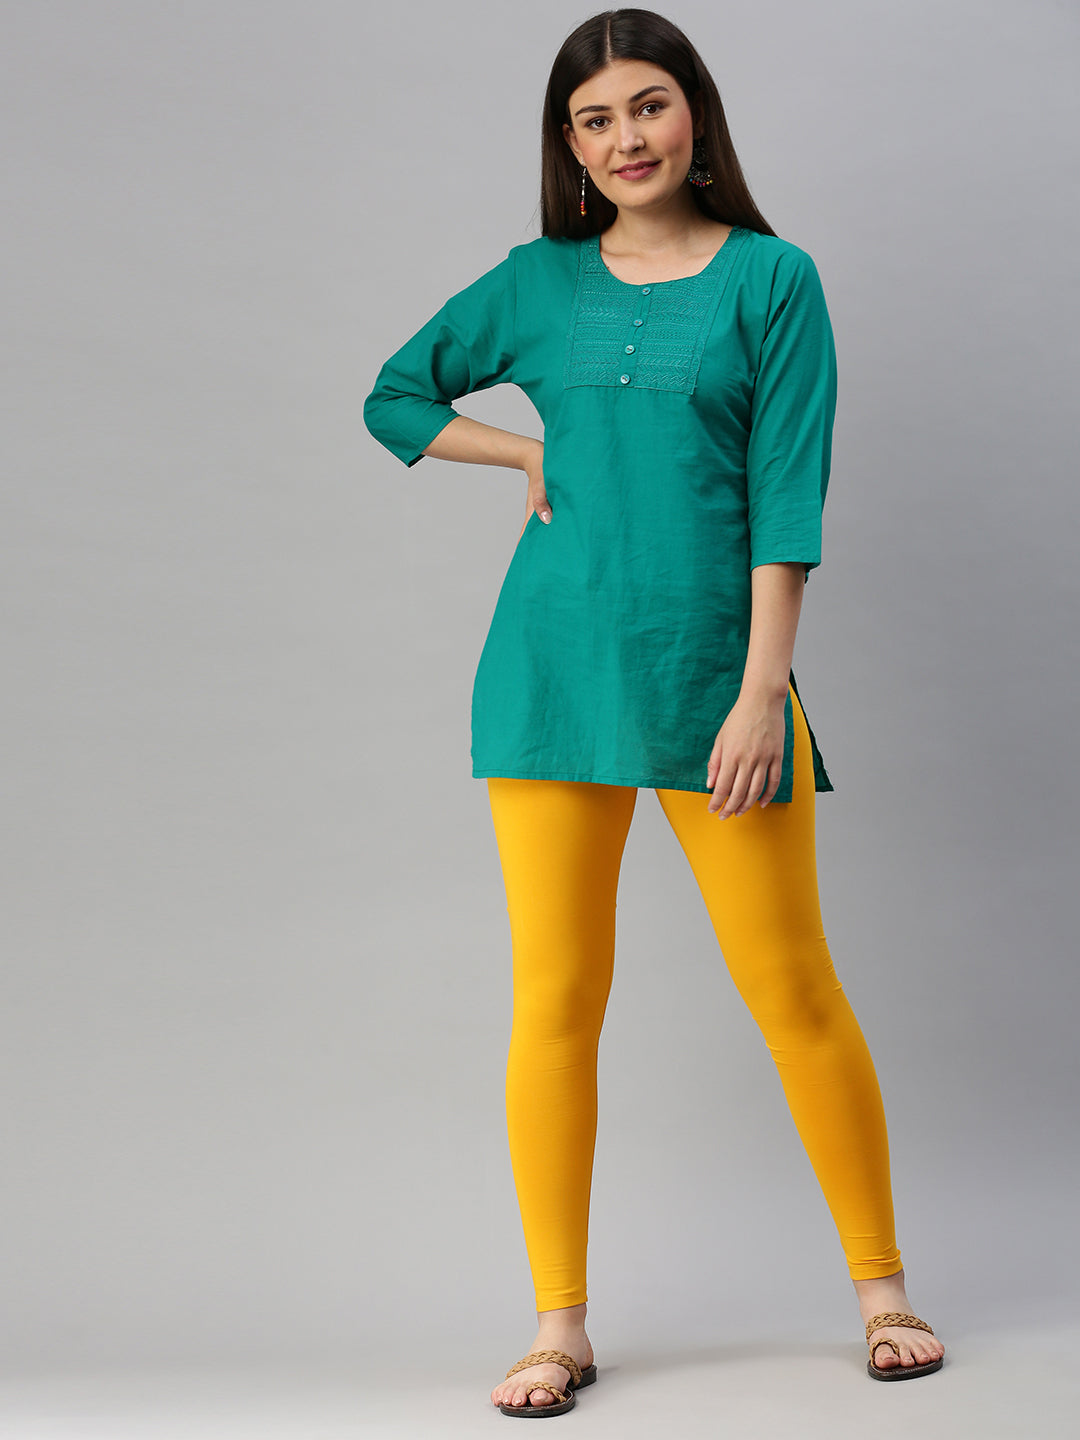 Neon Yellow UV 50+ Lucy Bright Performance Leggings Yoga Pants - Women -  Pineapple Clothing